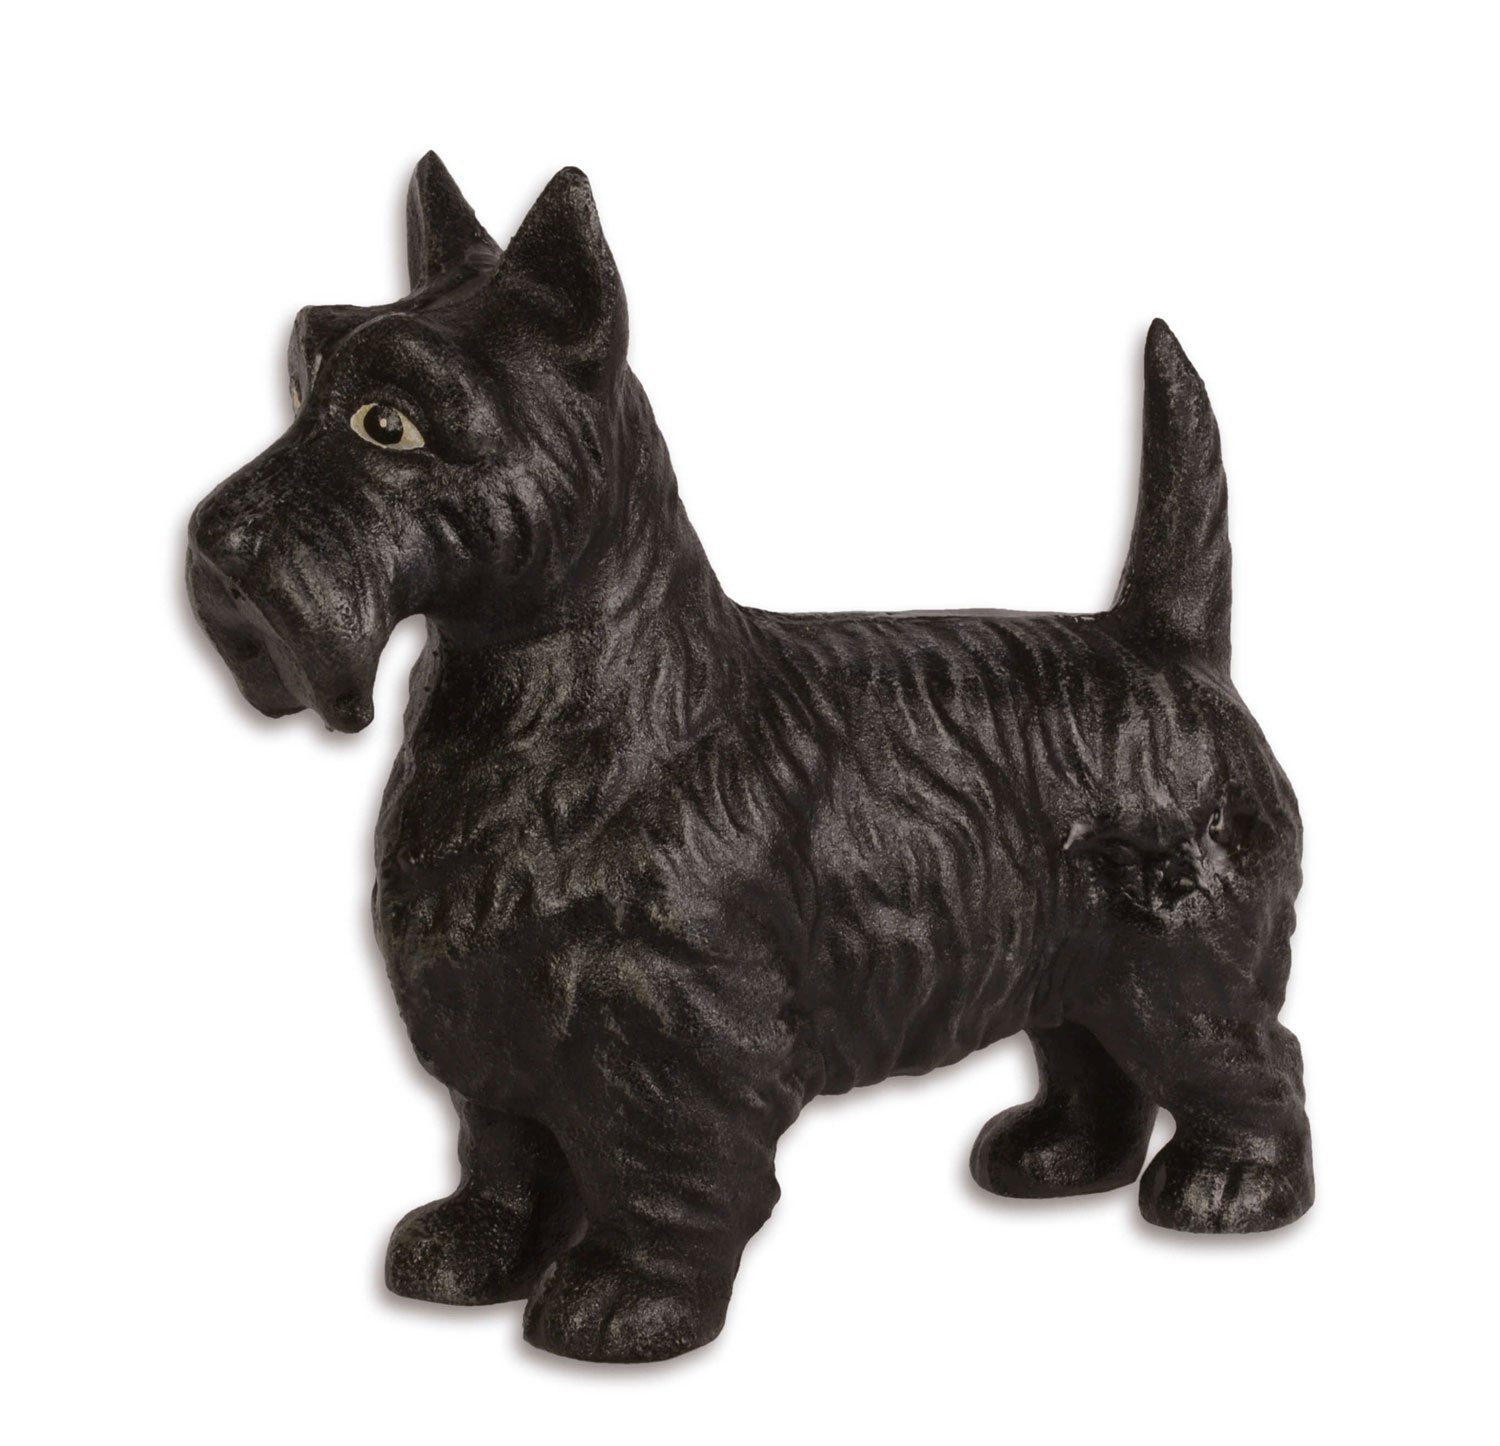 Aubaho Dekofigur Eisenfigur Scottish Terrier Hund Figur Skulptur Eisen Antik-Stil 23cm